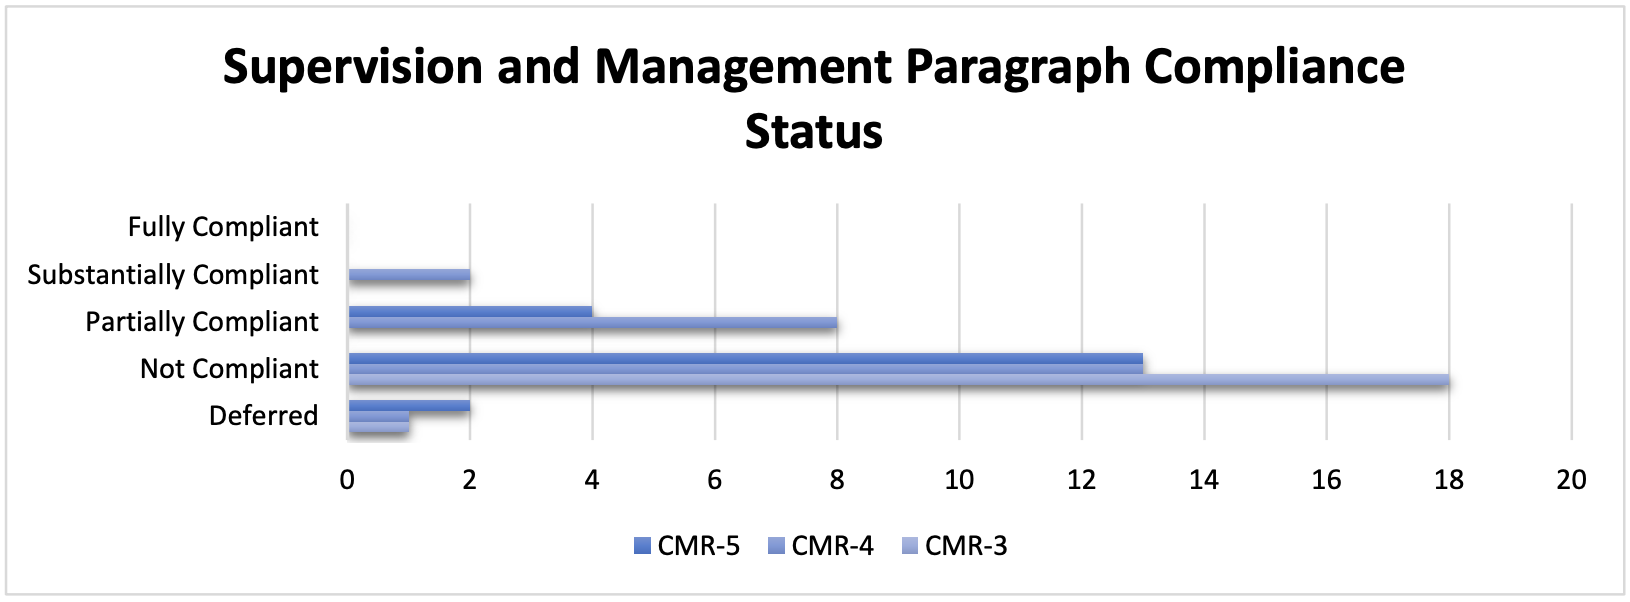 Figure 6. Supervision and Management: Paragraph Compliance Status